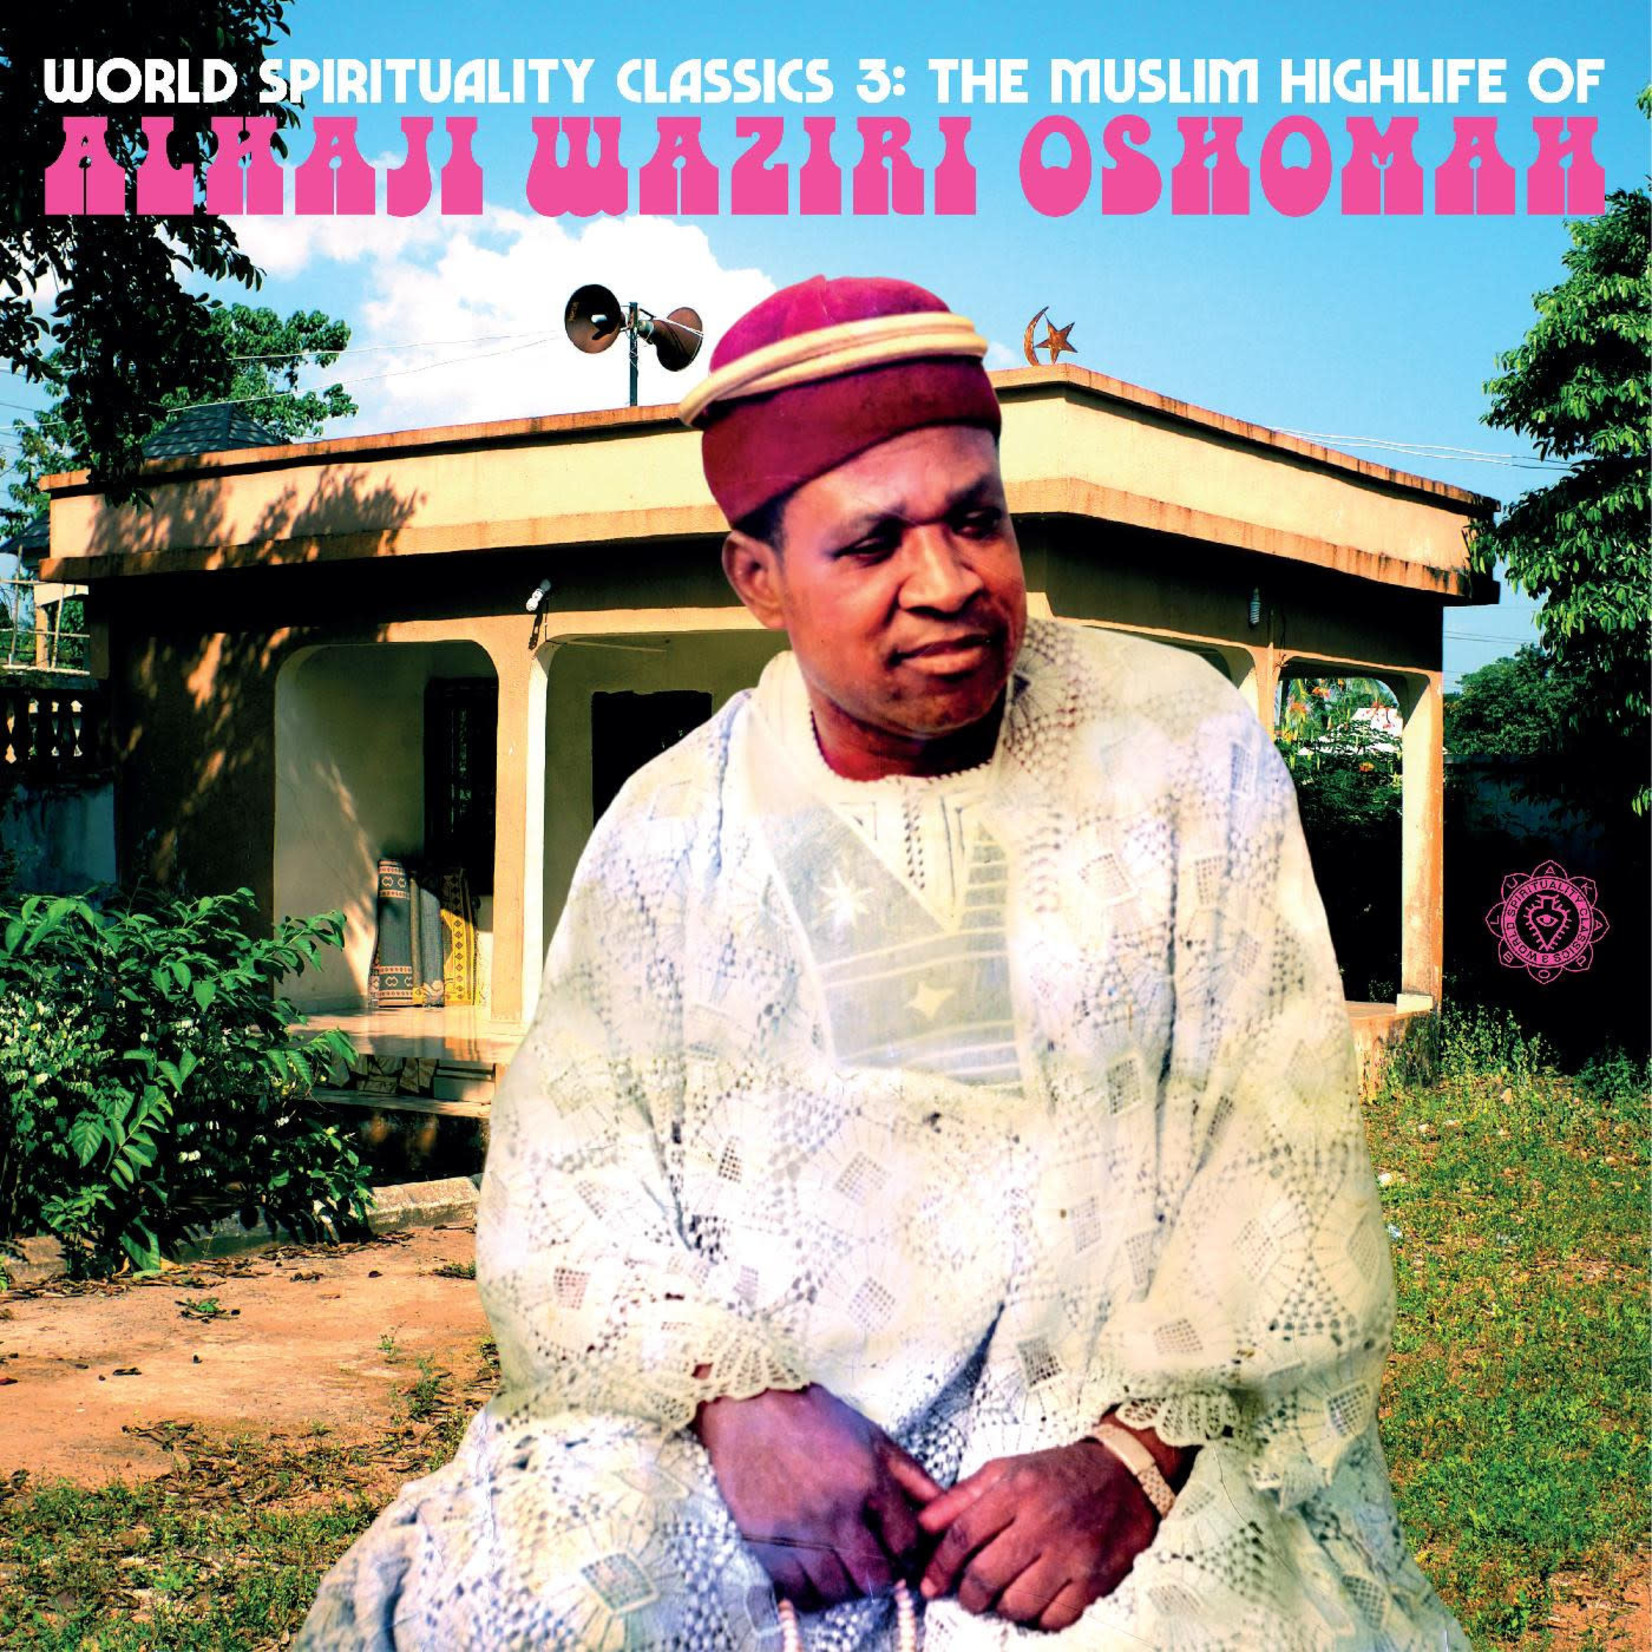 Luaka Bop Alhaji Waziri Oshomah - World Spirituality Classics 3: The Muslim Highlife Of Alhaji Waziri Oshomah (LP)